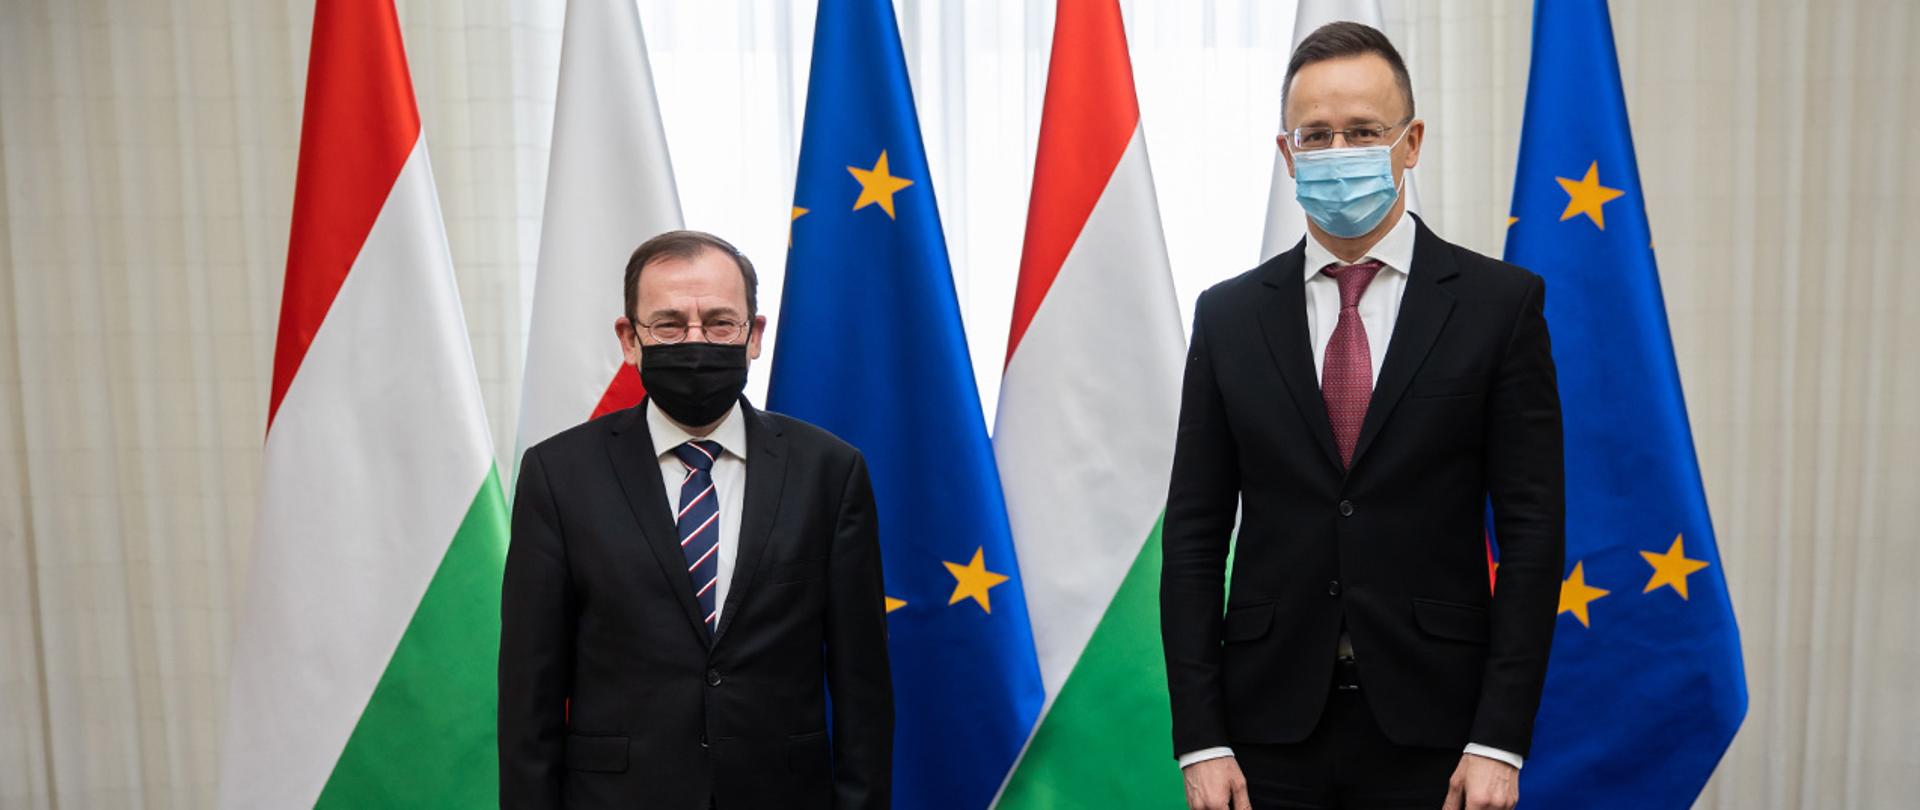 Minister Mariusz Kamiński and Péter Szijjártó, Hungary’s Minister of Foreign Affairs